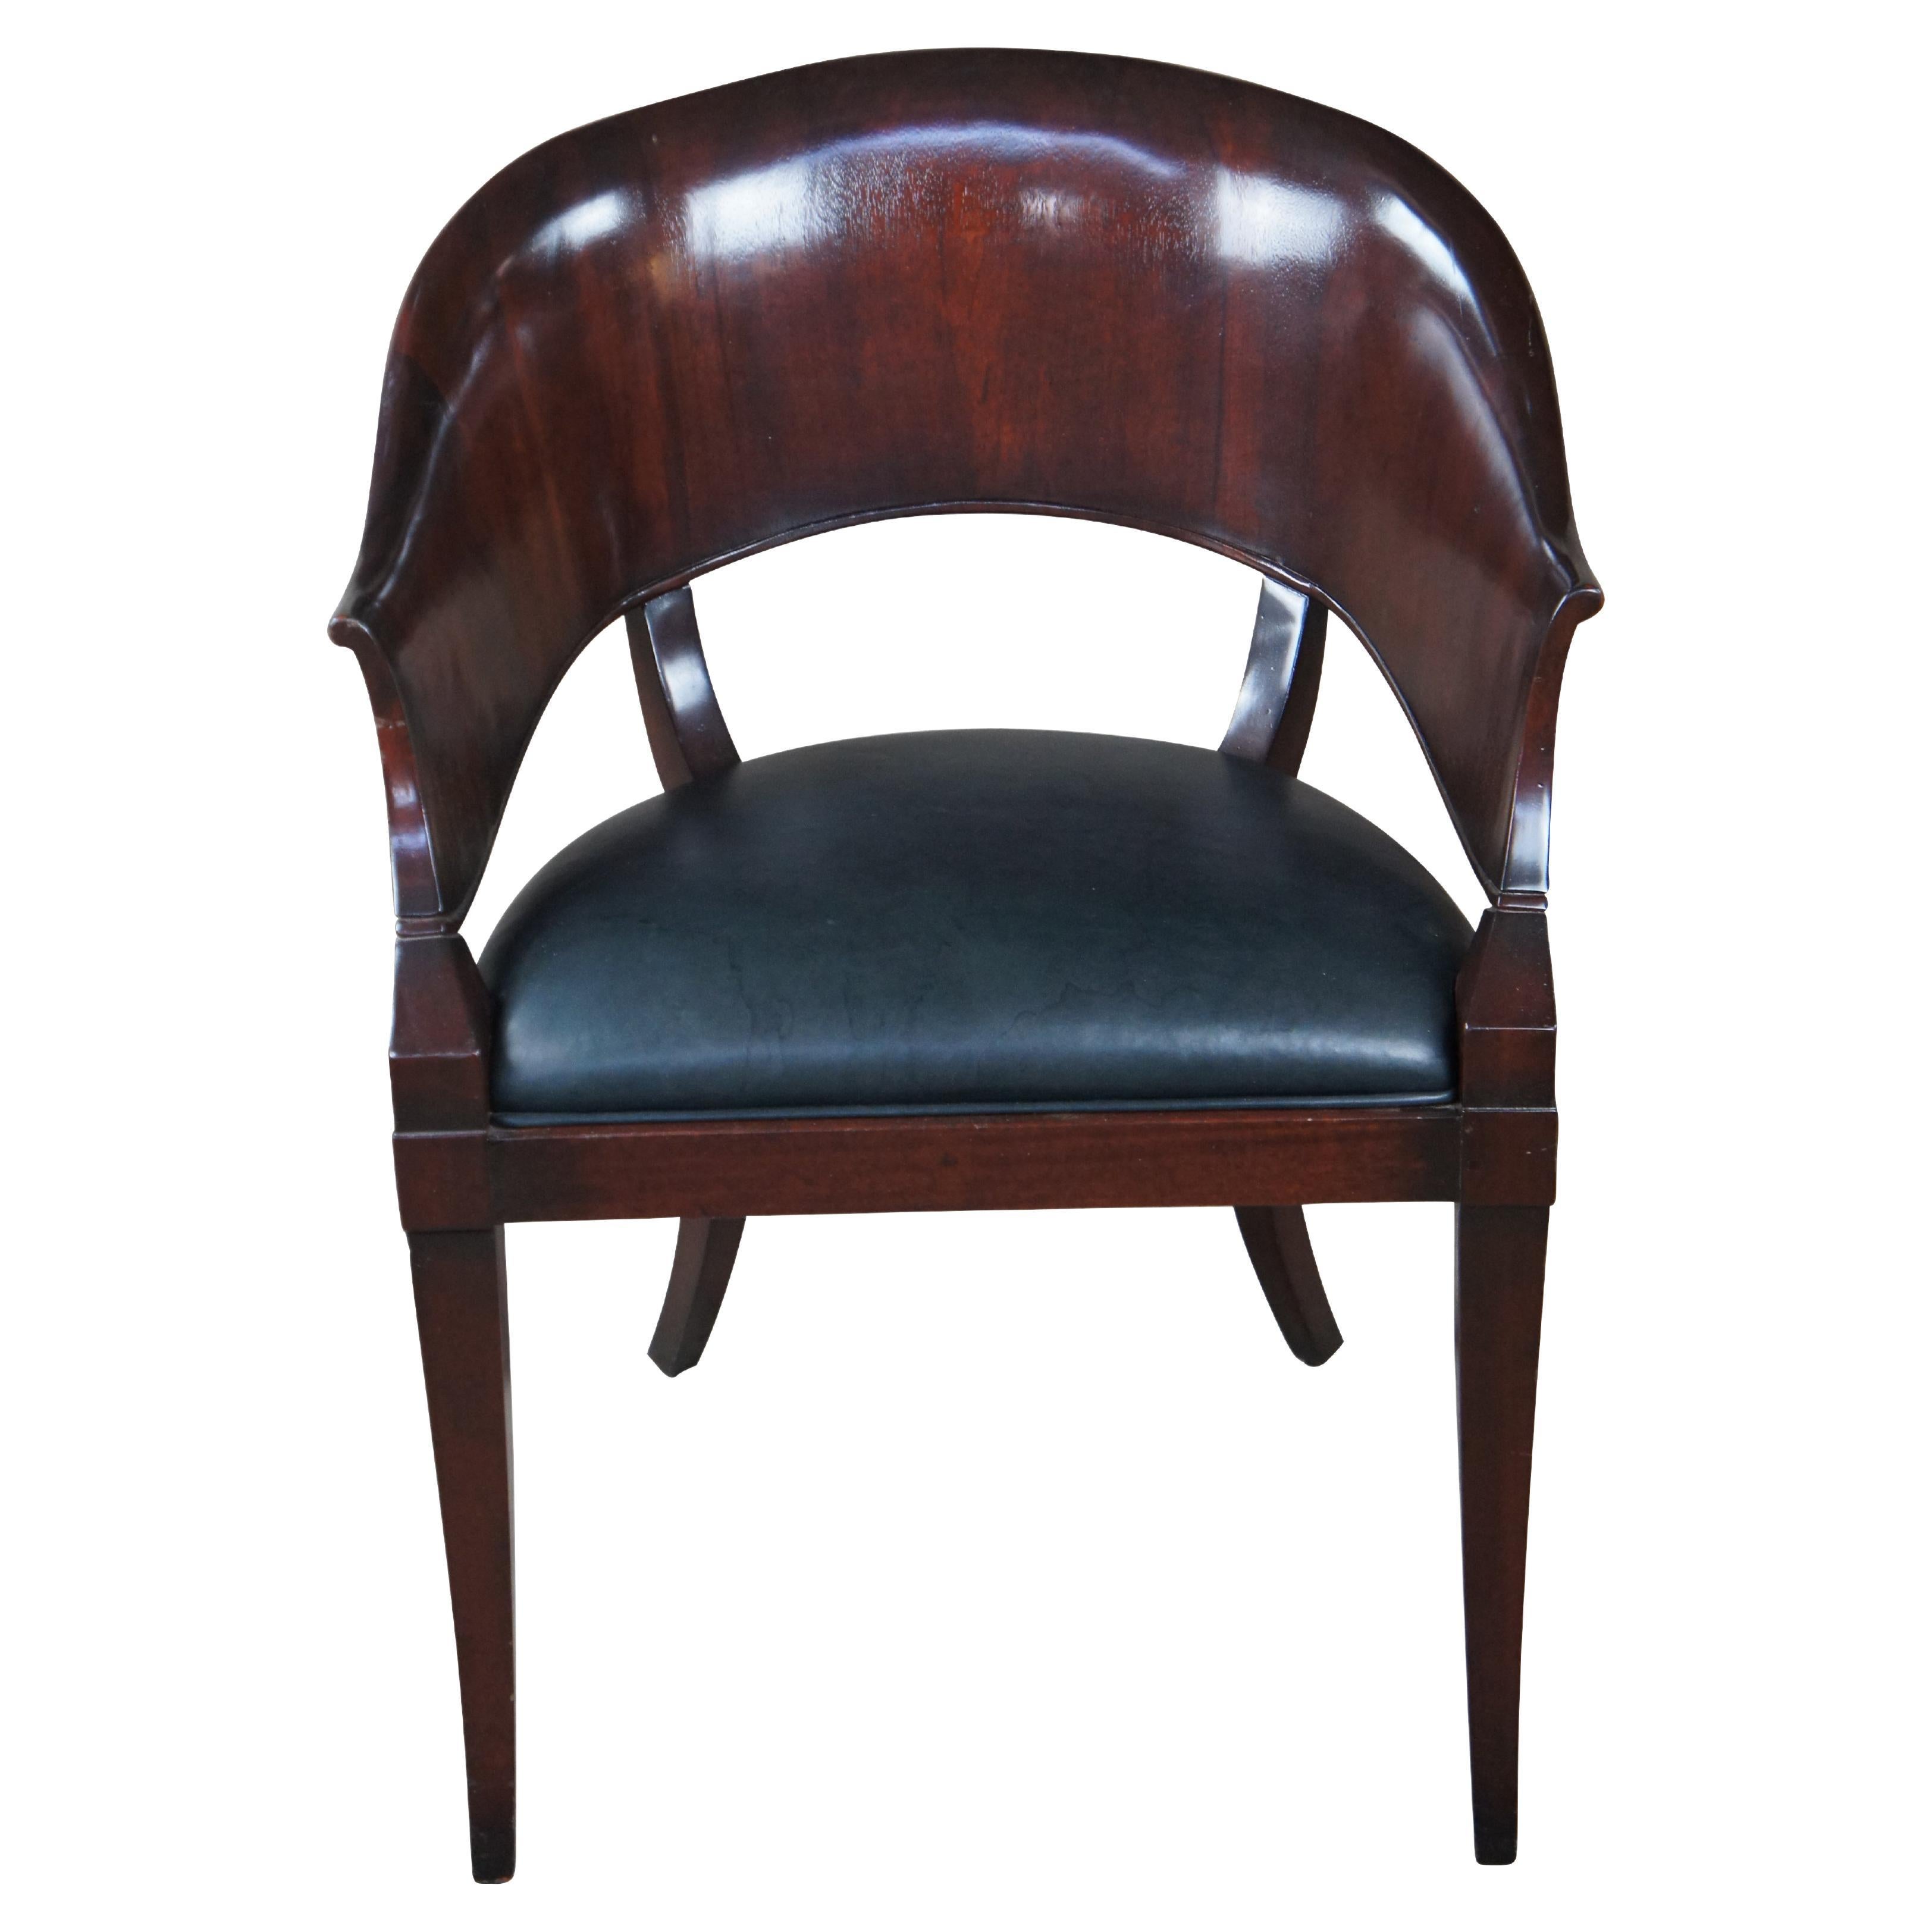 William Switzer Biedermeier French Art Deco Inspired Barrel Back Desk Arm Chair For Sale